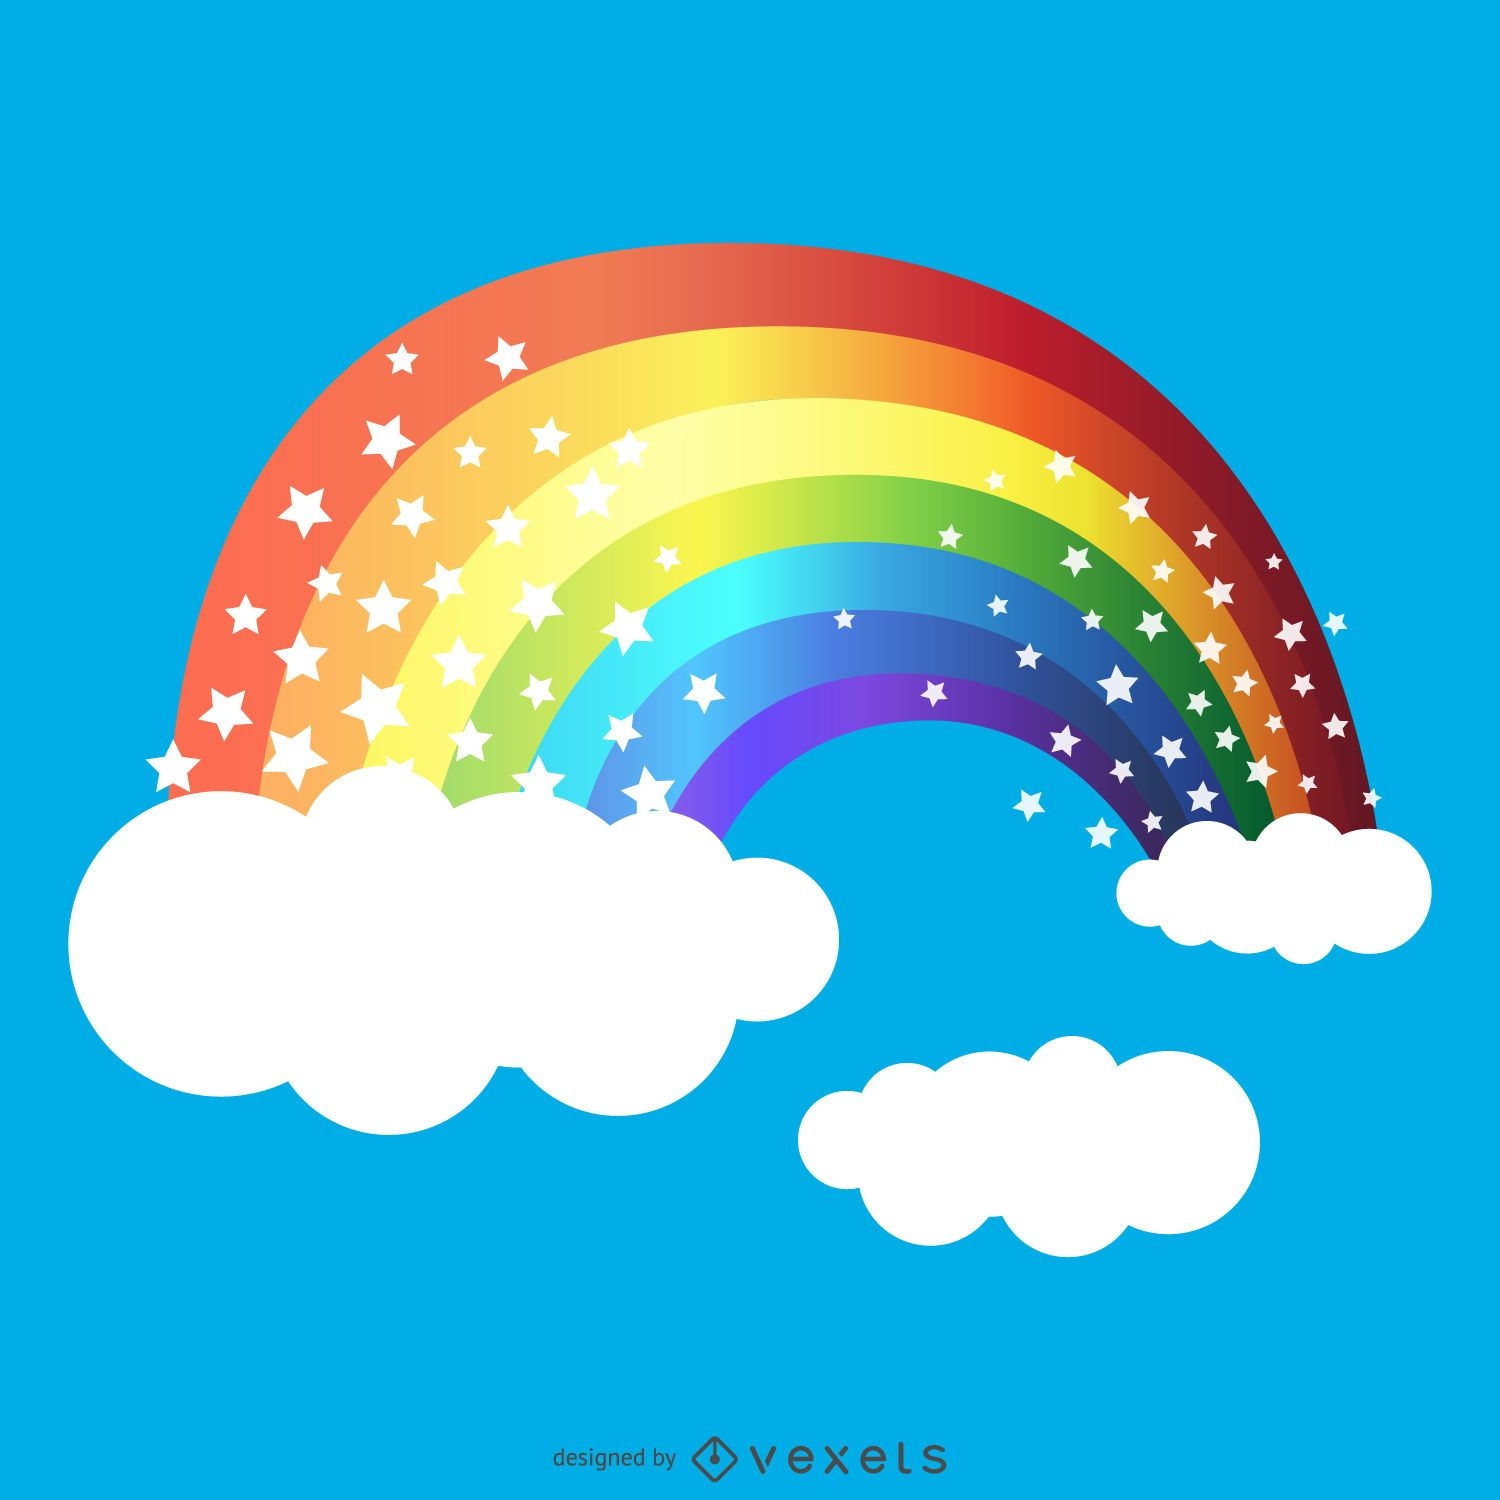 rainbow drawing with stars 259622